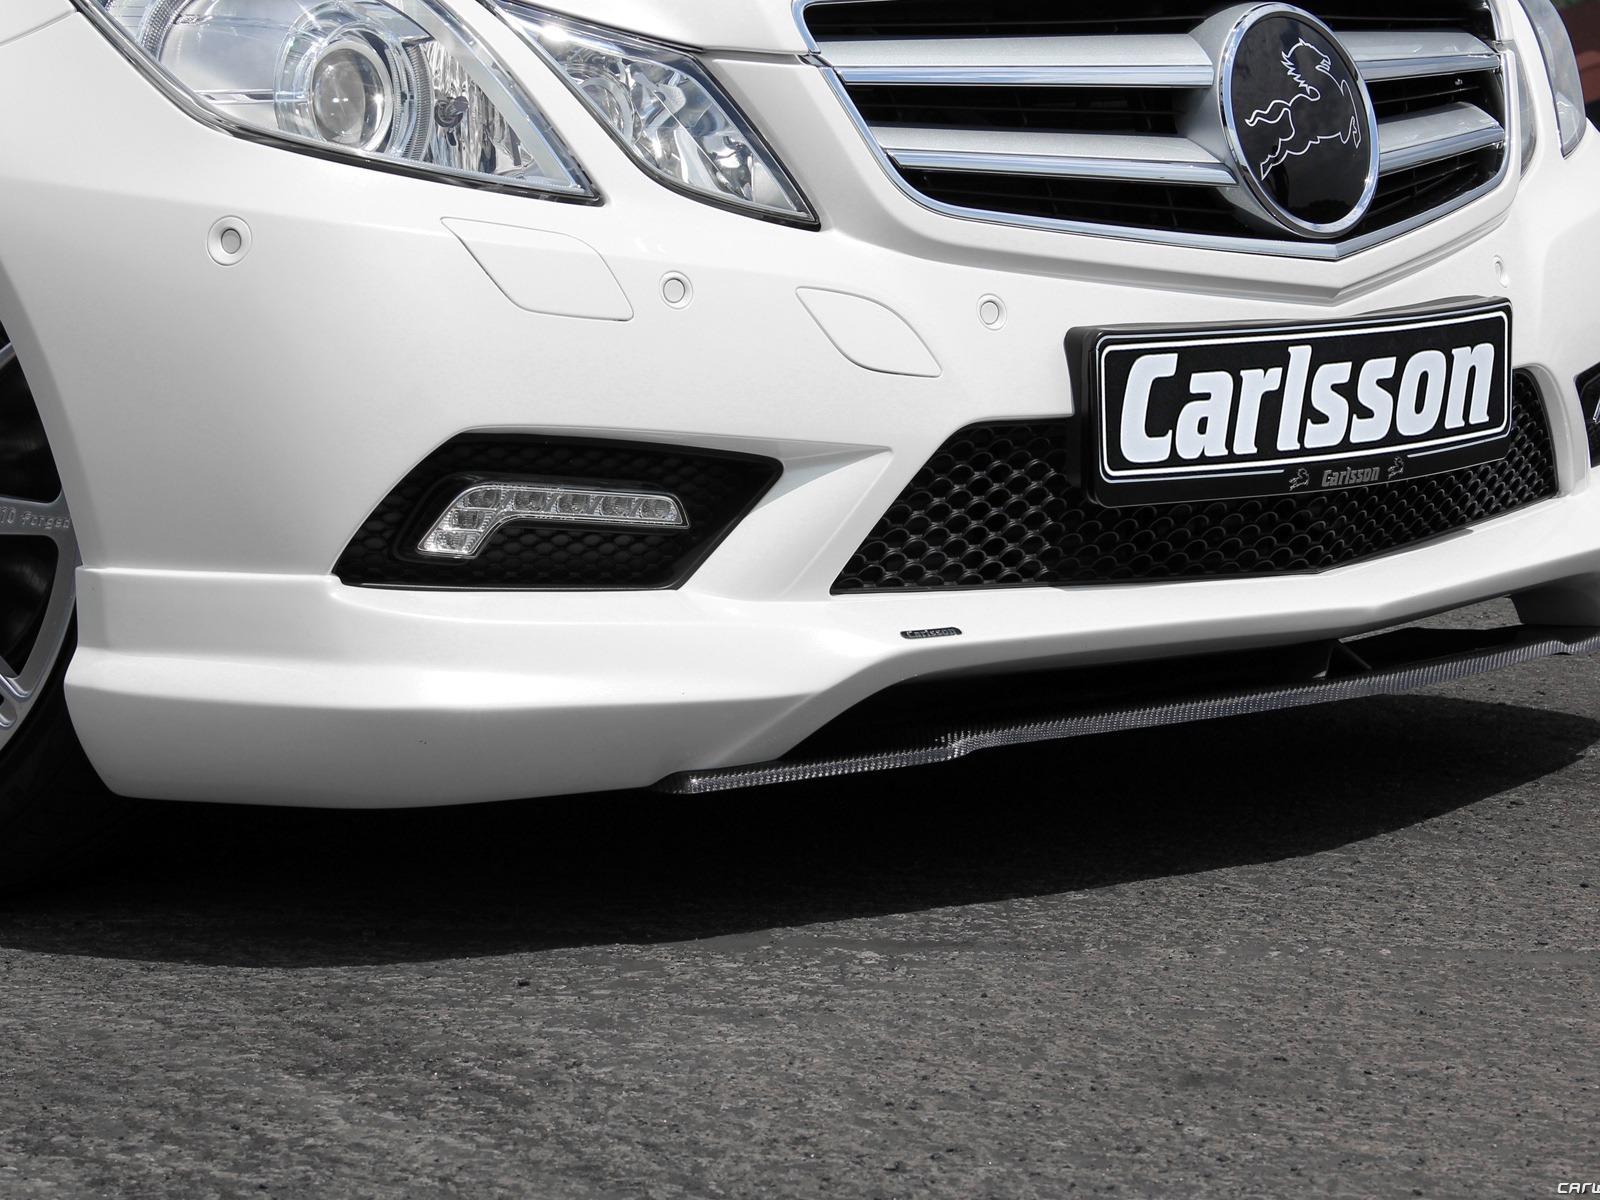 Carlsson Mercedes-Benz E-Class Cabriolet - 2010 高清壁纸8 - 1600x1200